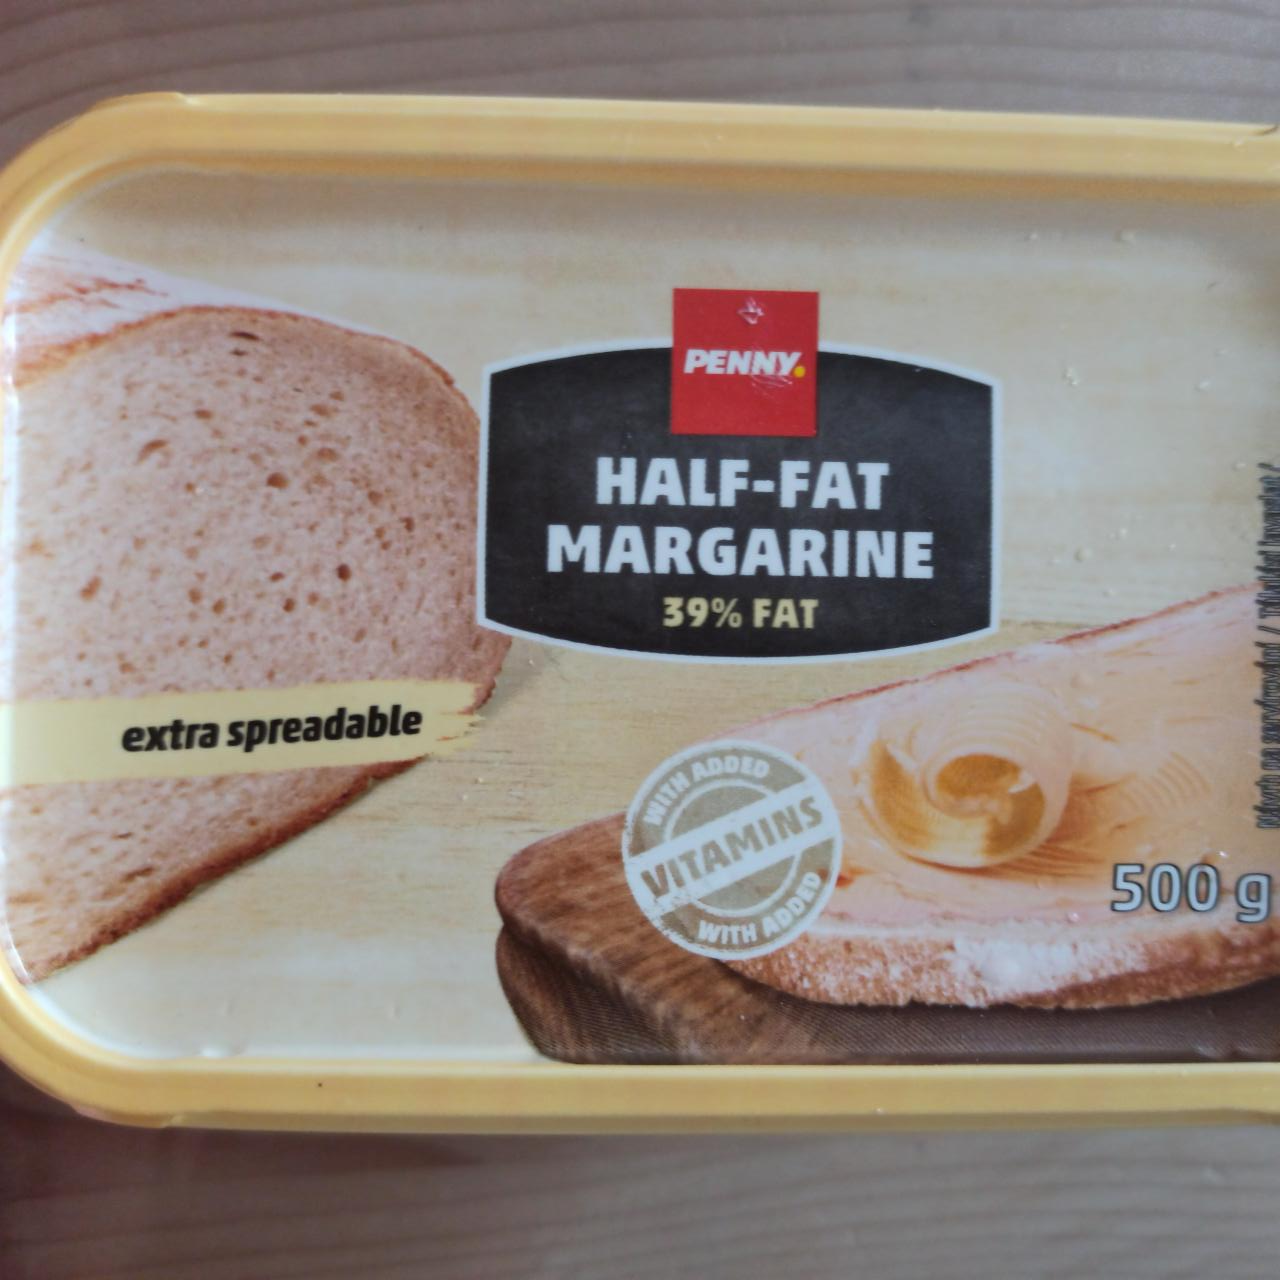 Fotografie - Half-Fat Margarine 39% Fat Penny